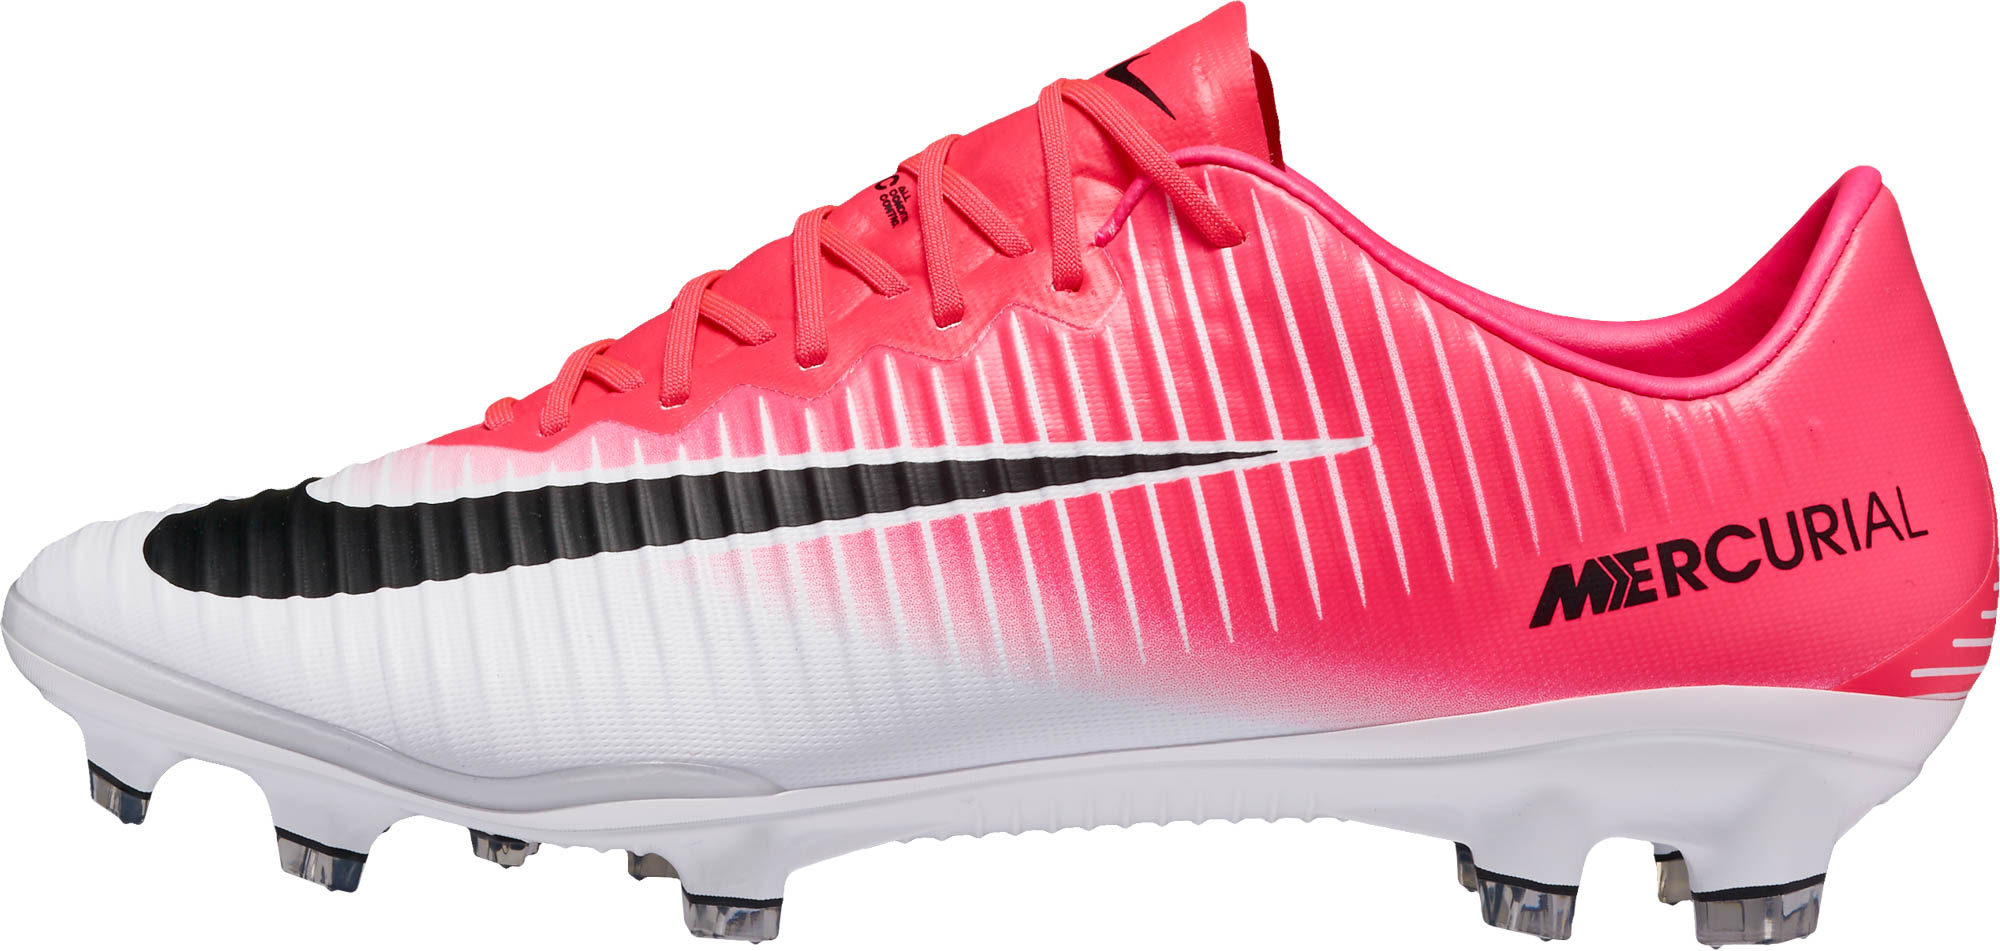 Disminución surco bronce Nike Mercurial Vapor XI - Pink Mercurial Soccer Cleats